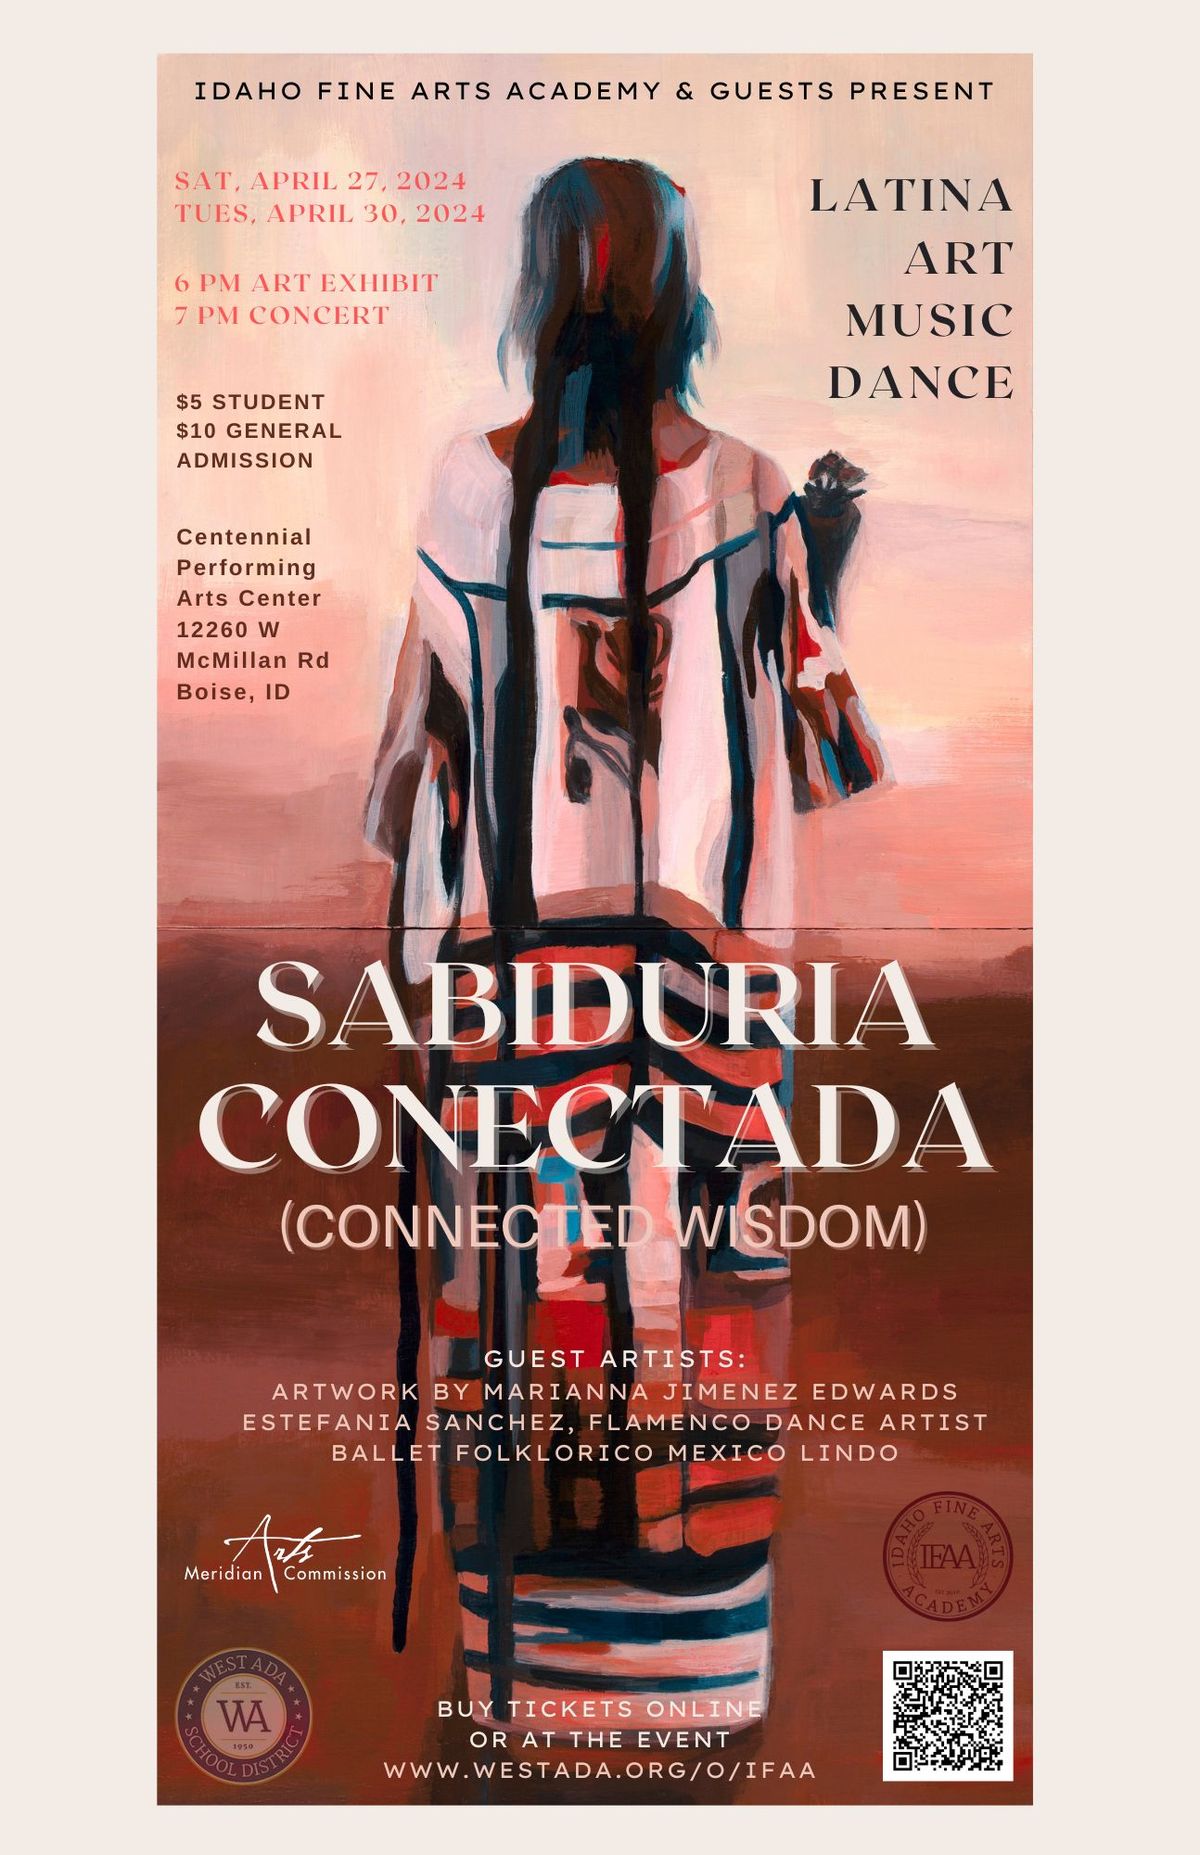 Sabiduria Conectada (Connected Wisdom) Arts Event 